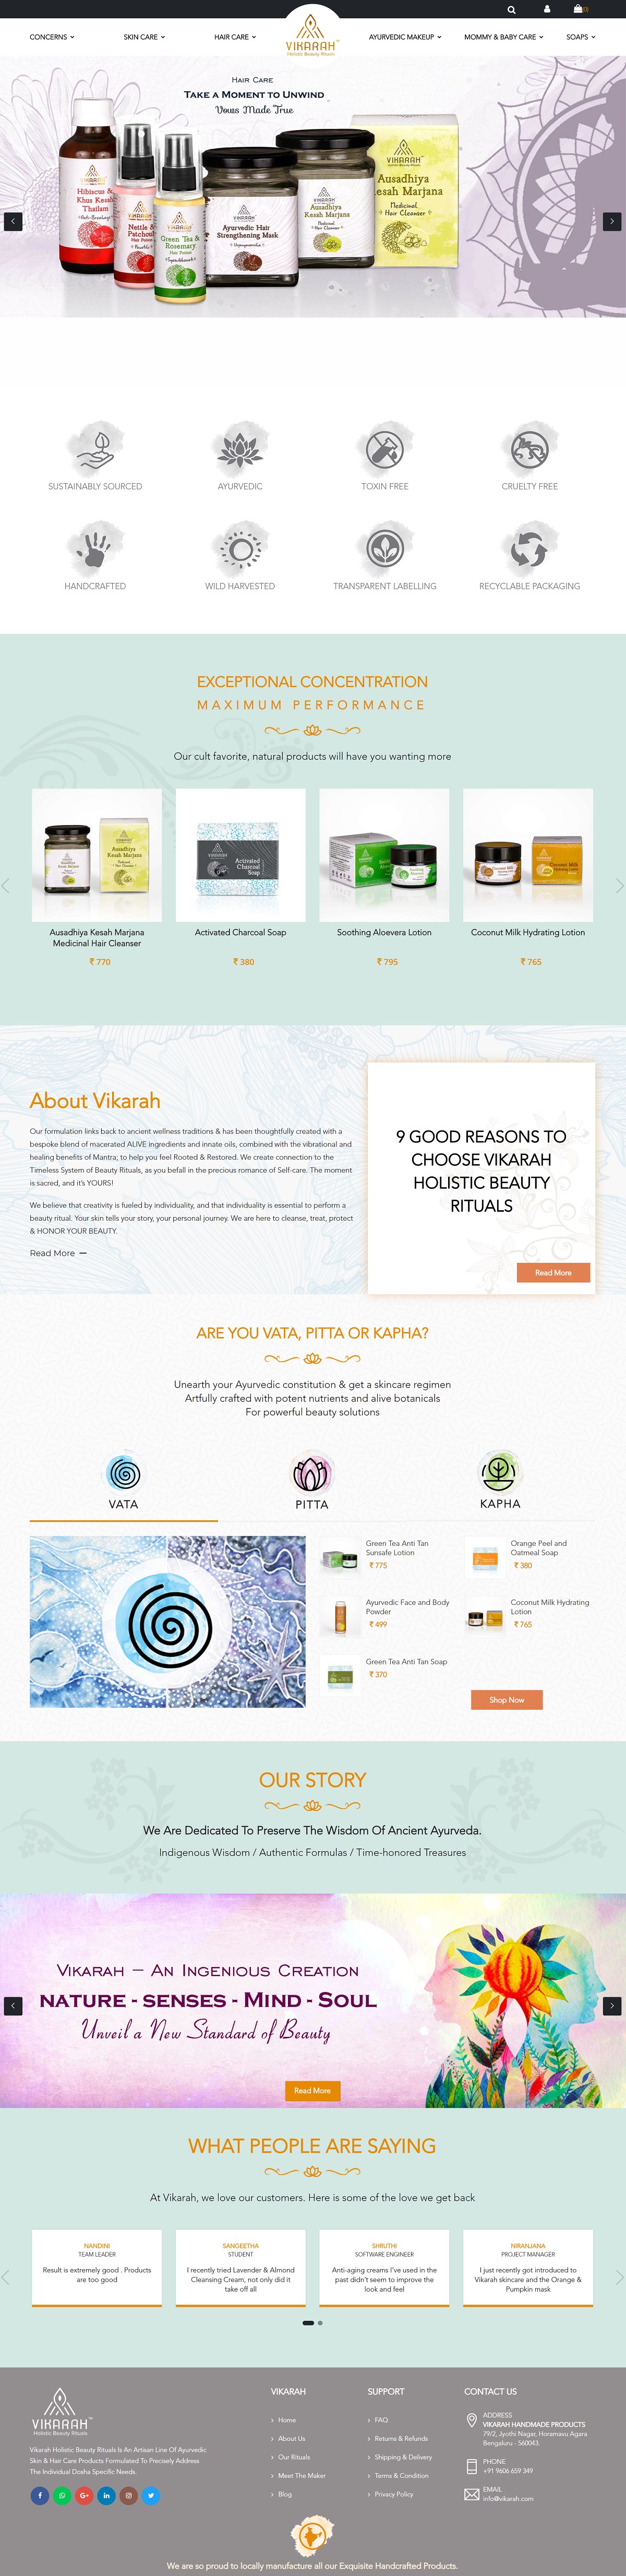 Home Page (Vata + Pitta +  Kapha)